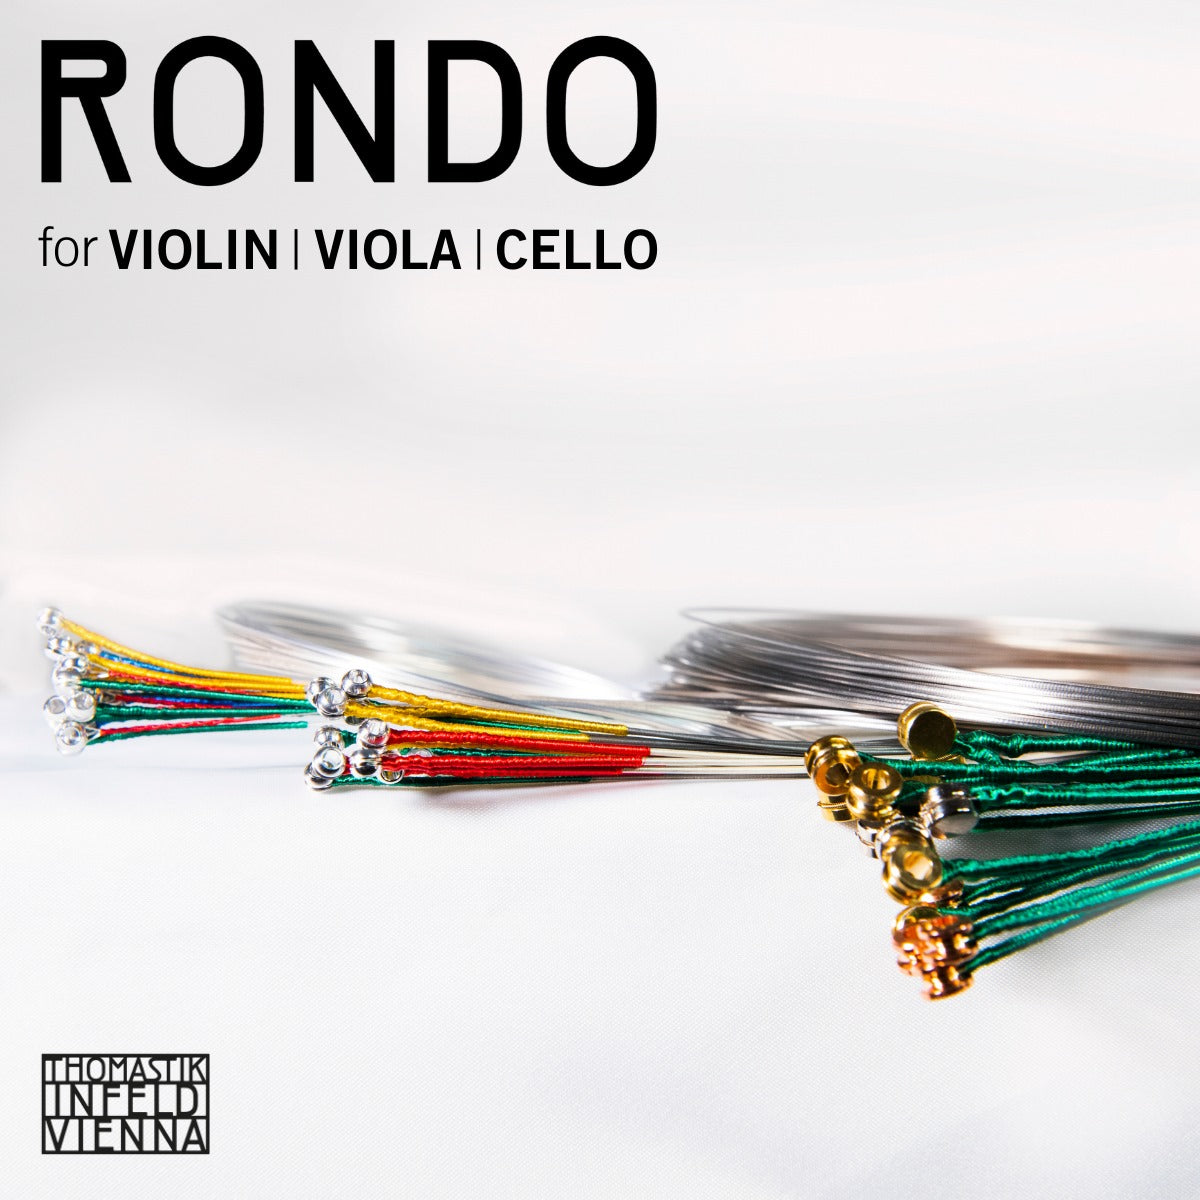 Thomastik Rondo Viola Strings